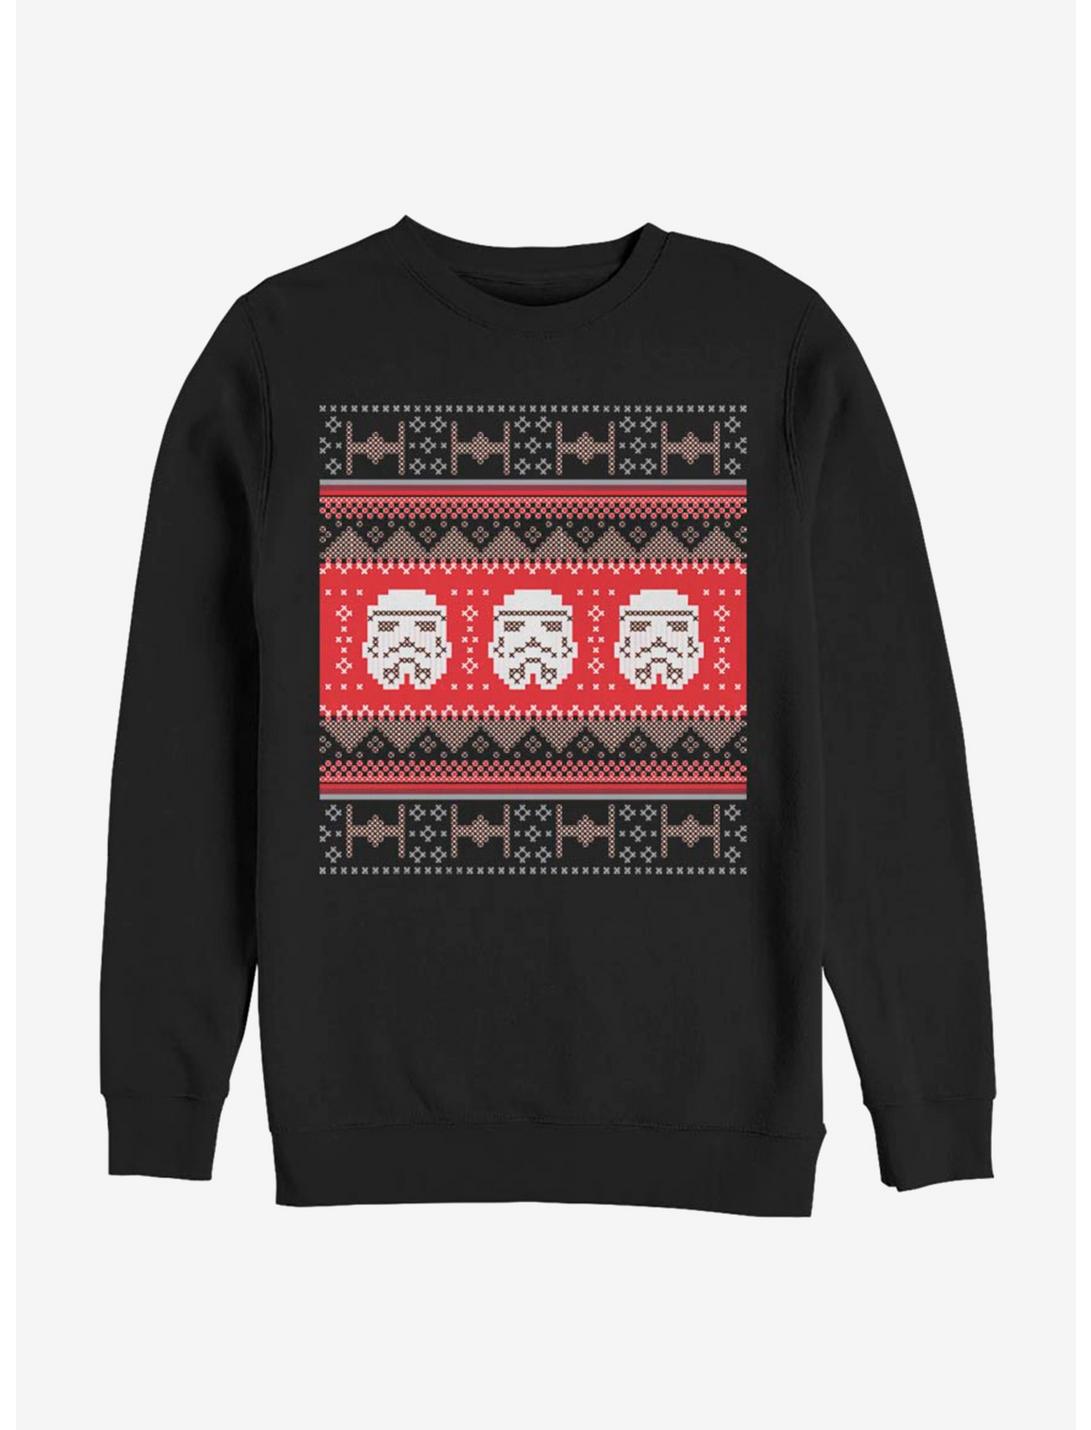 Star Wars Trooper Stitches Sweatshirt, BLACK, hi-res